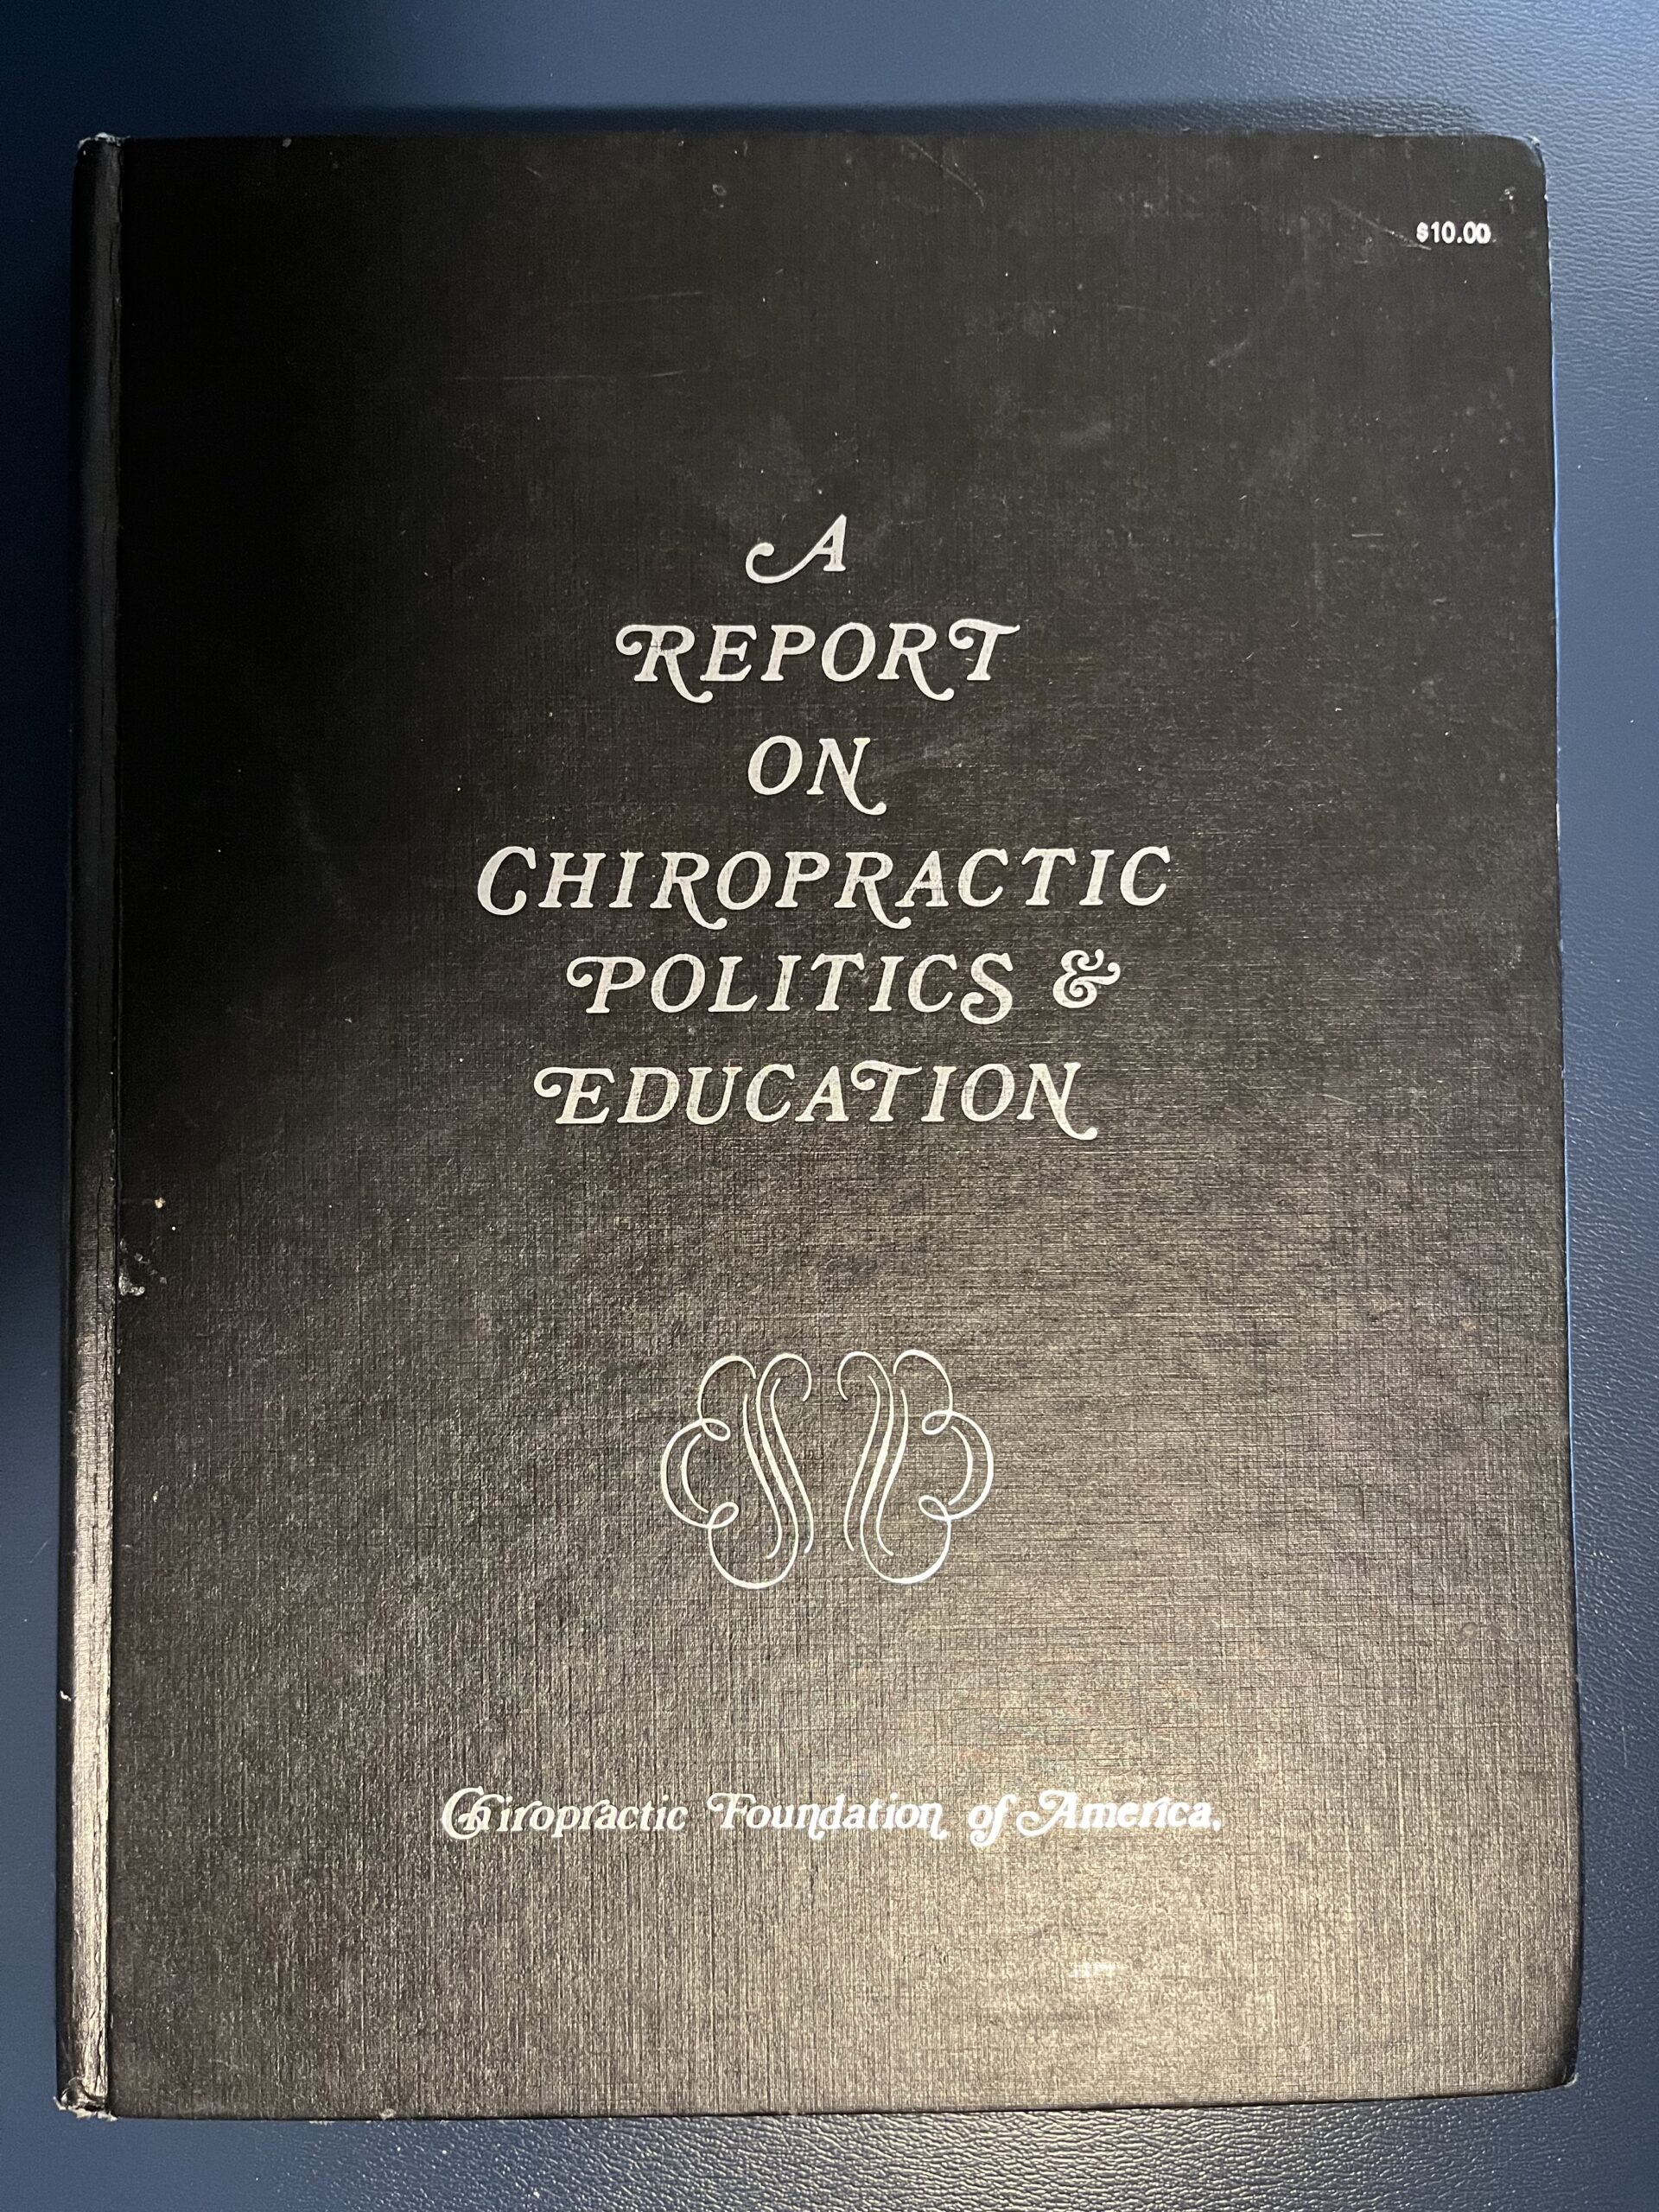 Chiropractic Politics & Education (1979)